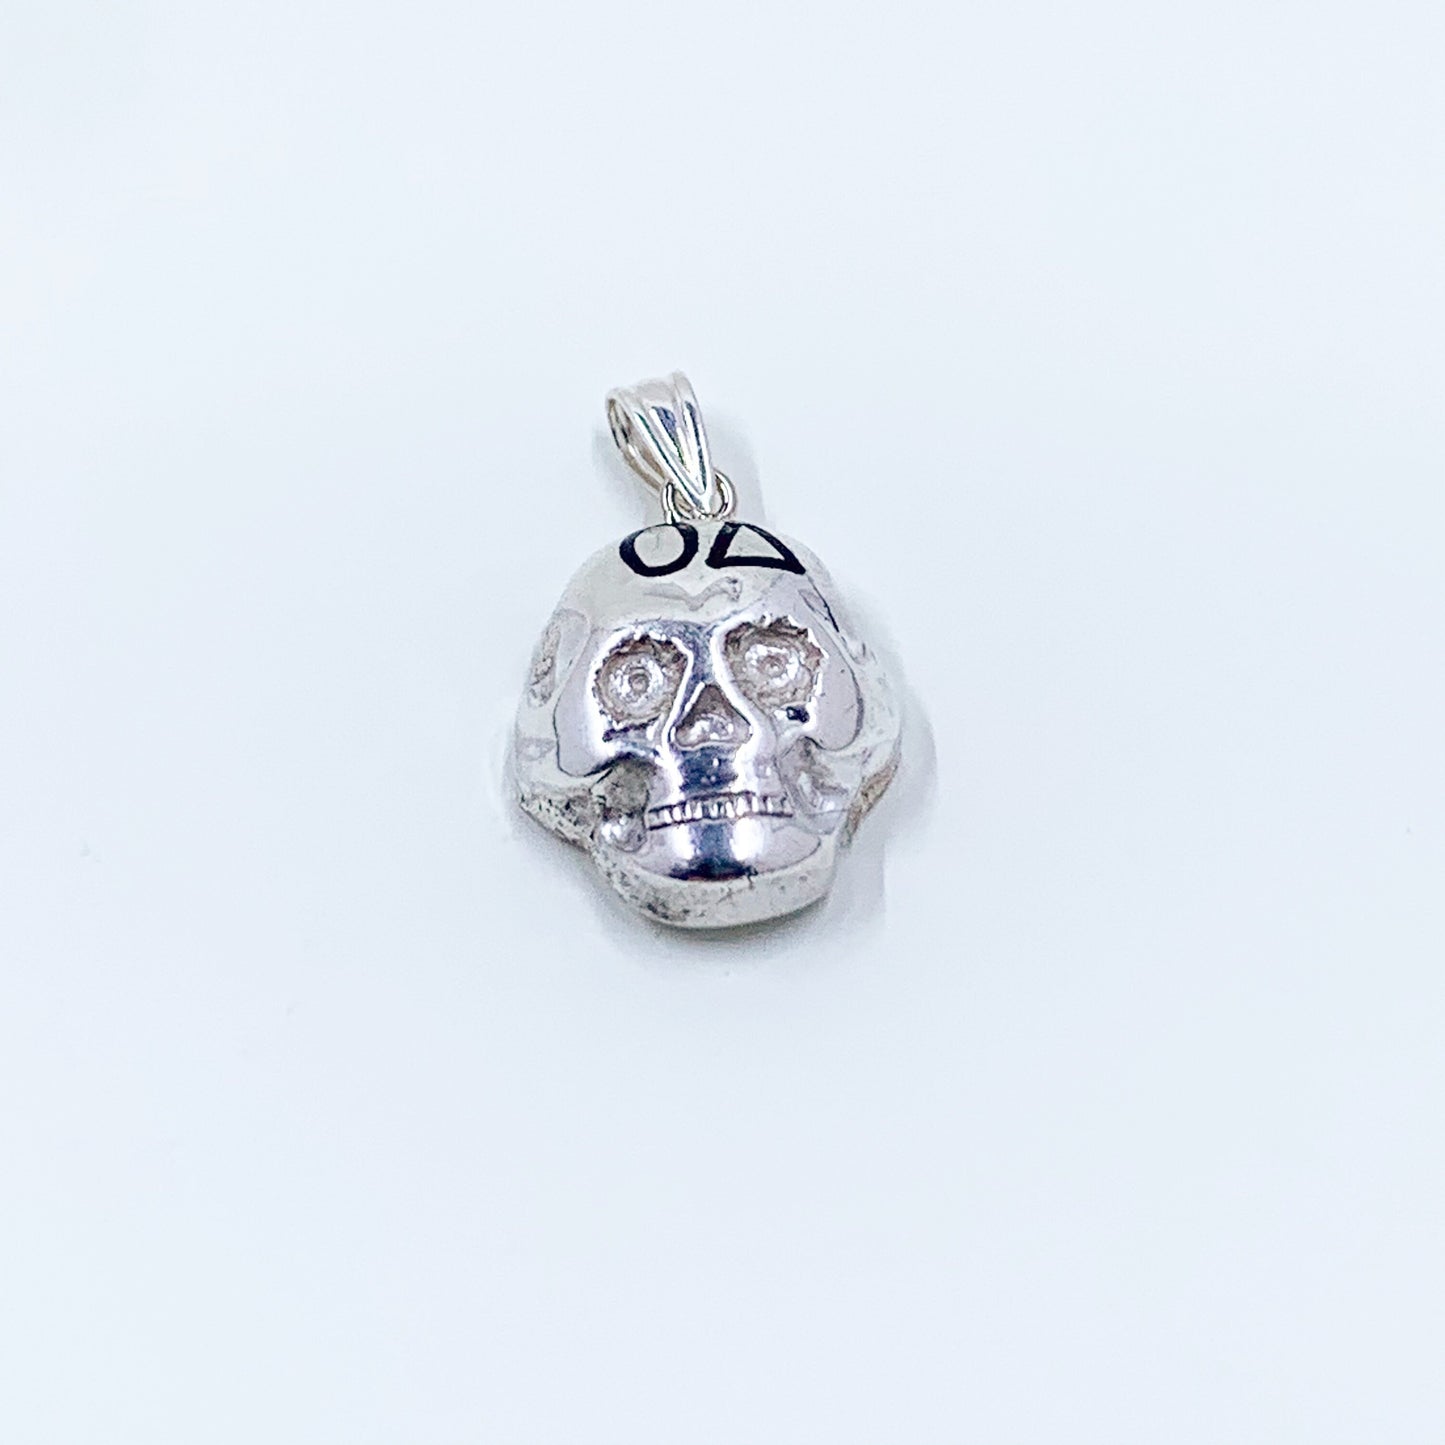 Vintage Silver Skull Pendant | Omicron Delta Skull Charm | Conversion Jewelry